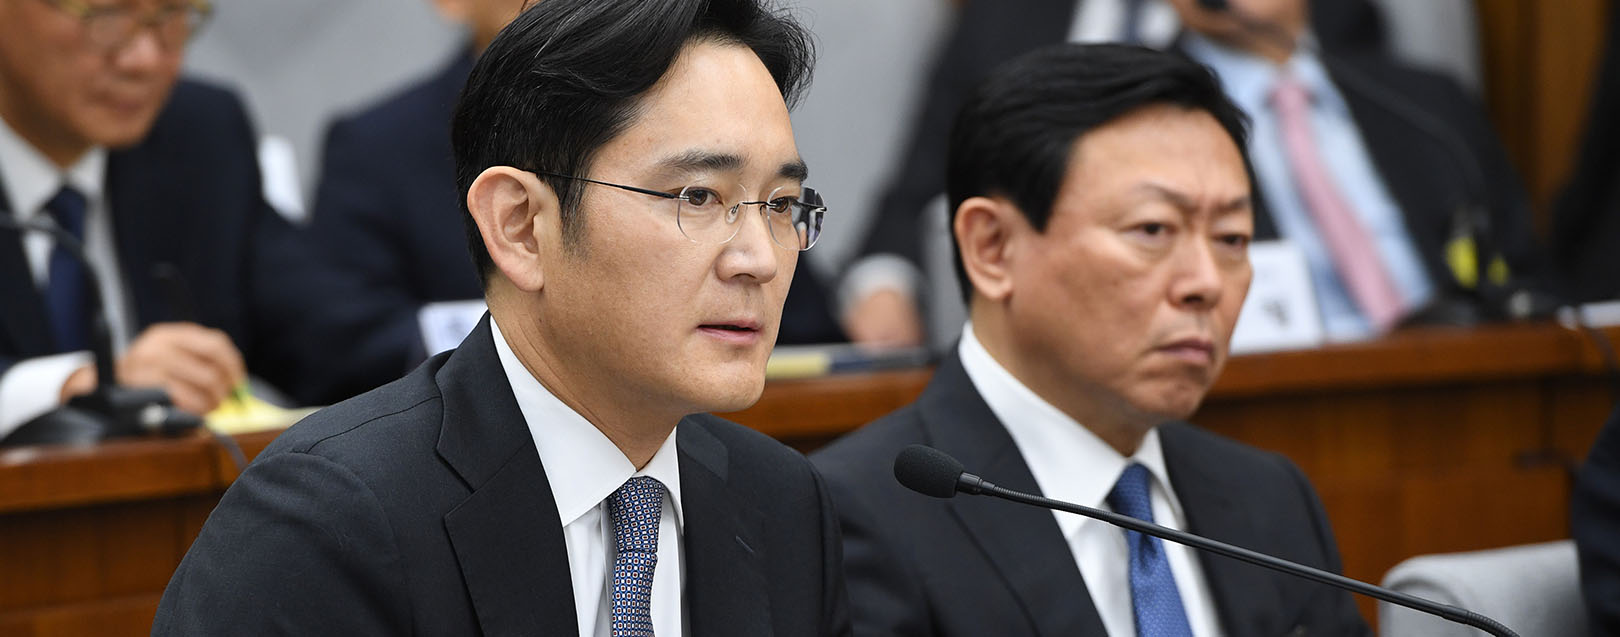 Arrest warrant sought for Samsung head in corruption scandal